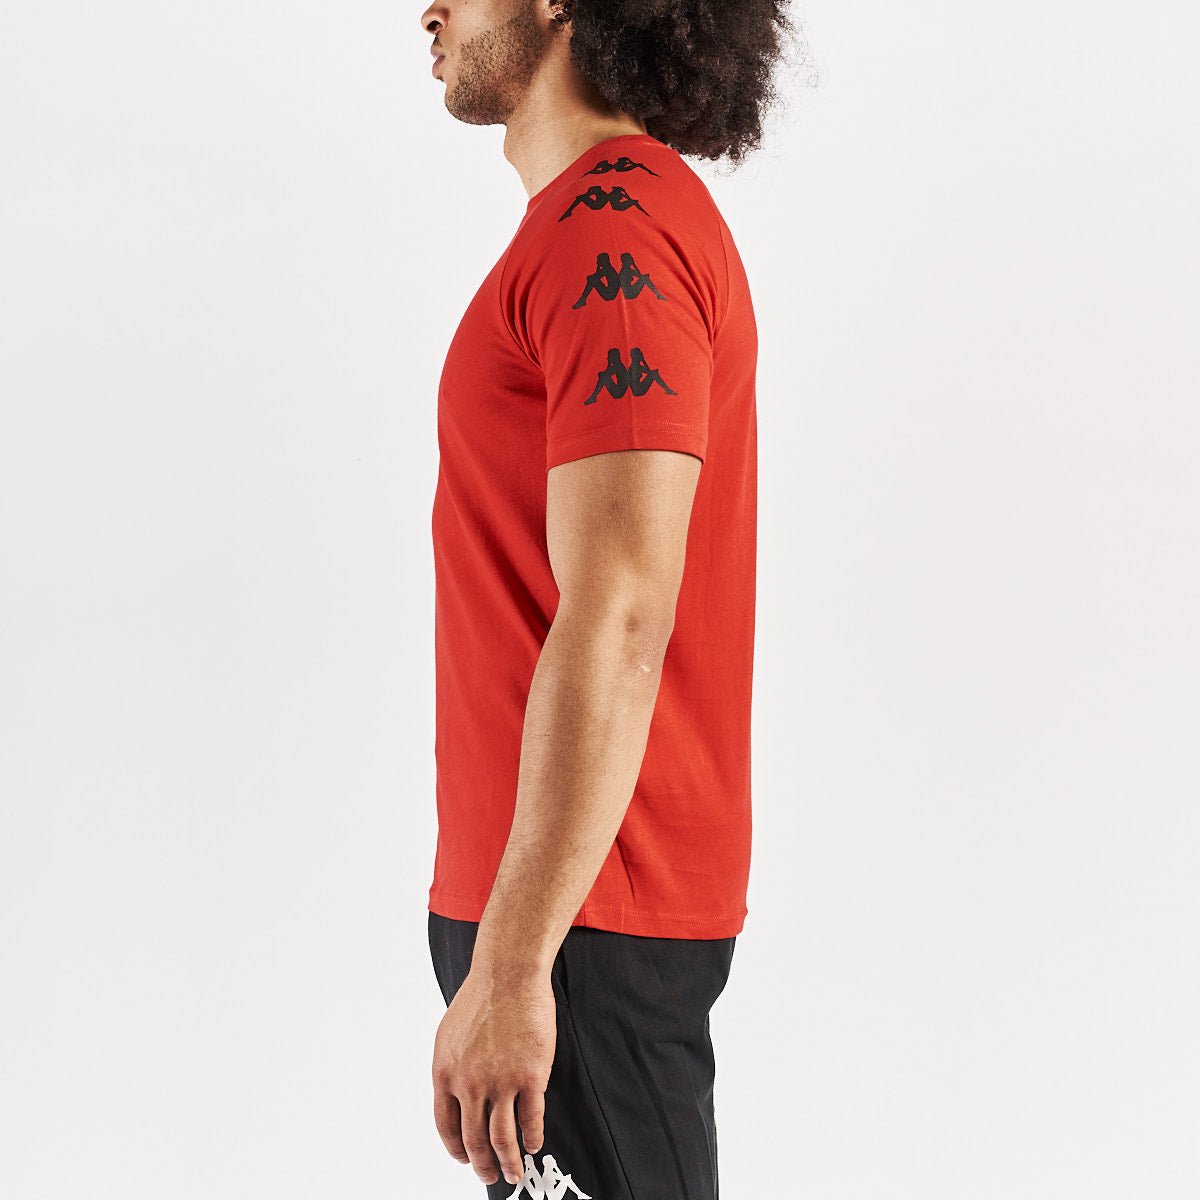 T-shirt Klaky rouge homme - Image 2